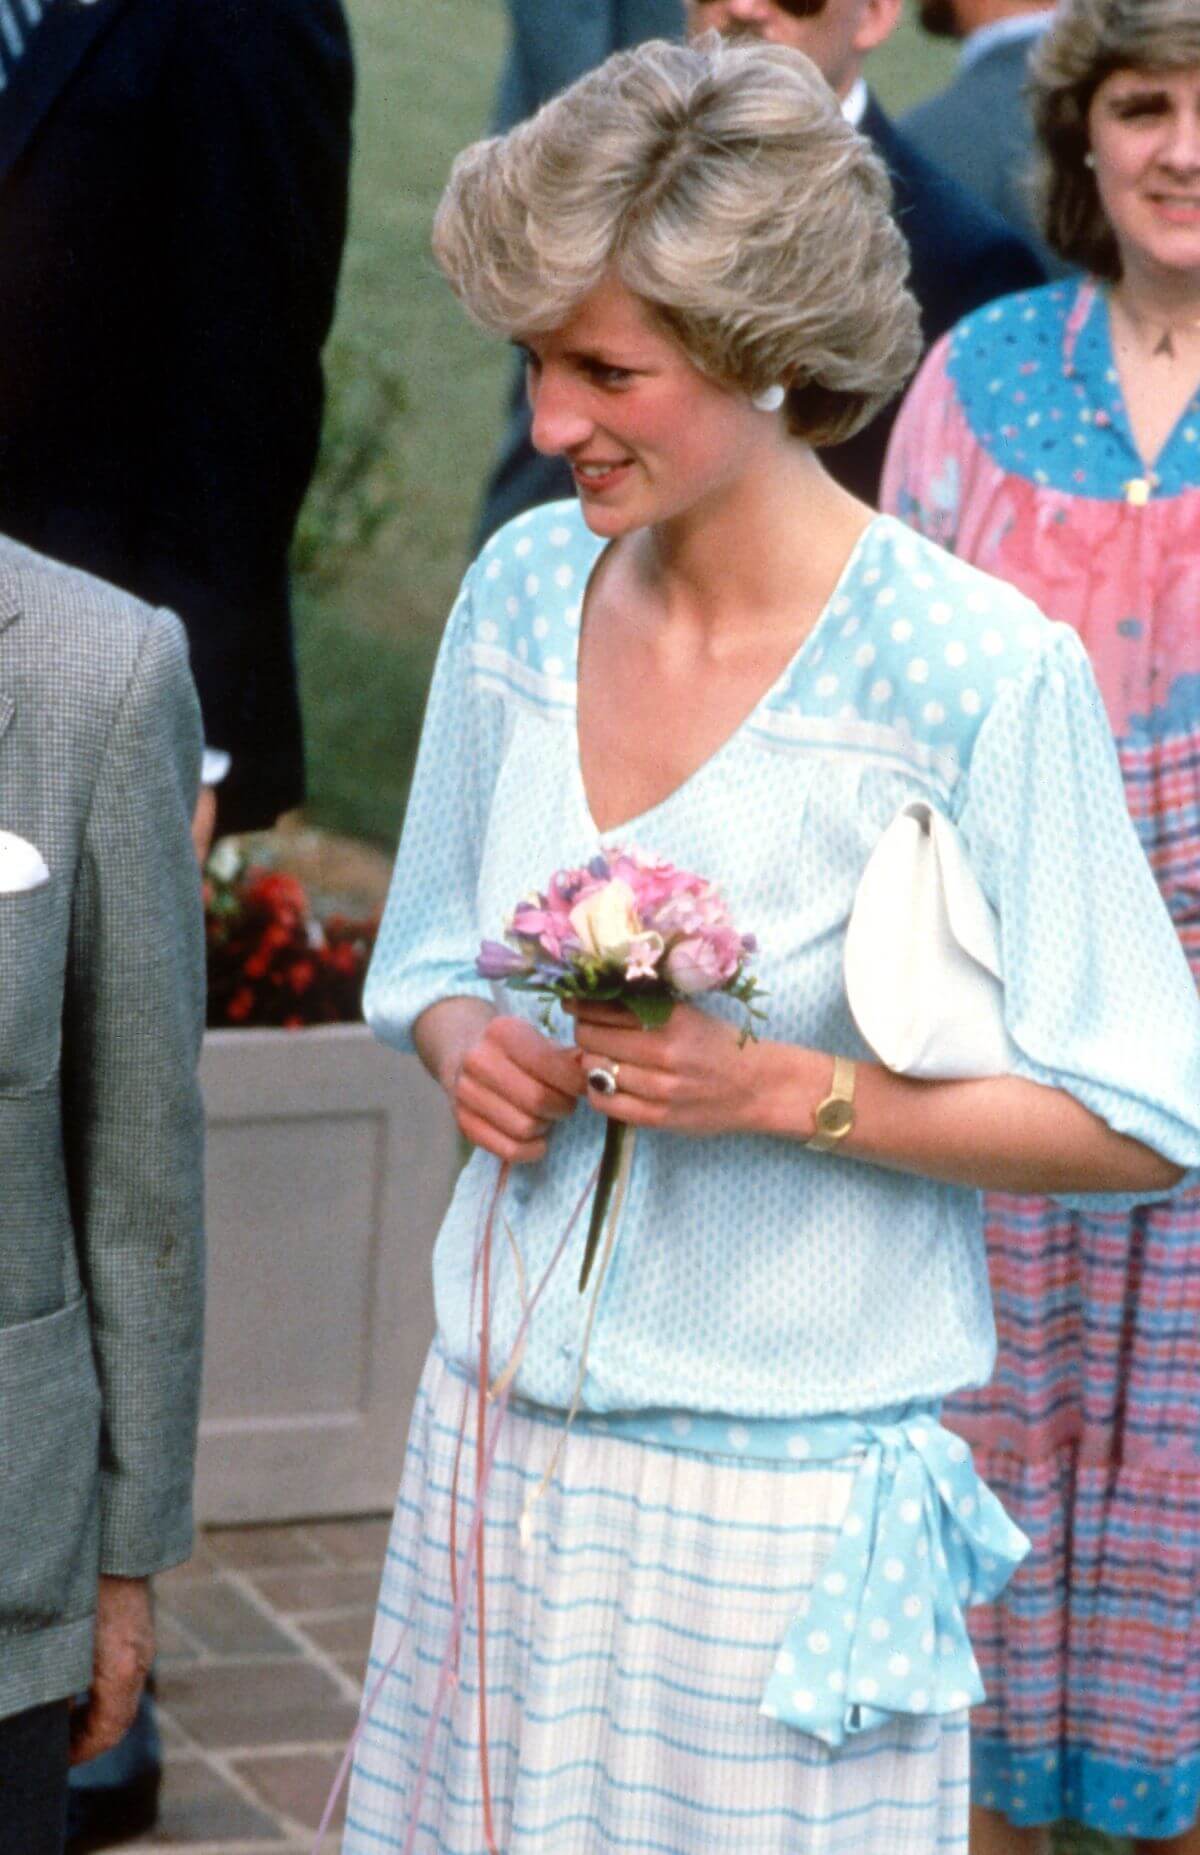 Princess Diana wearing a pale blue and white dress designed by Lady Dale Tryon aka Kanga, attends a Polo match